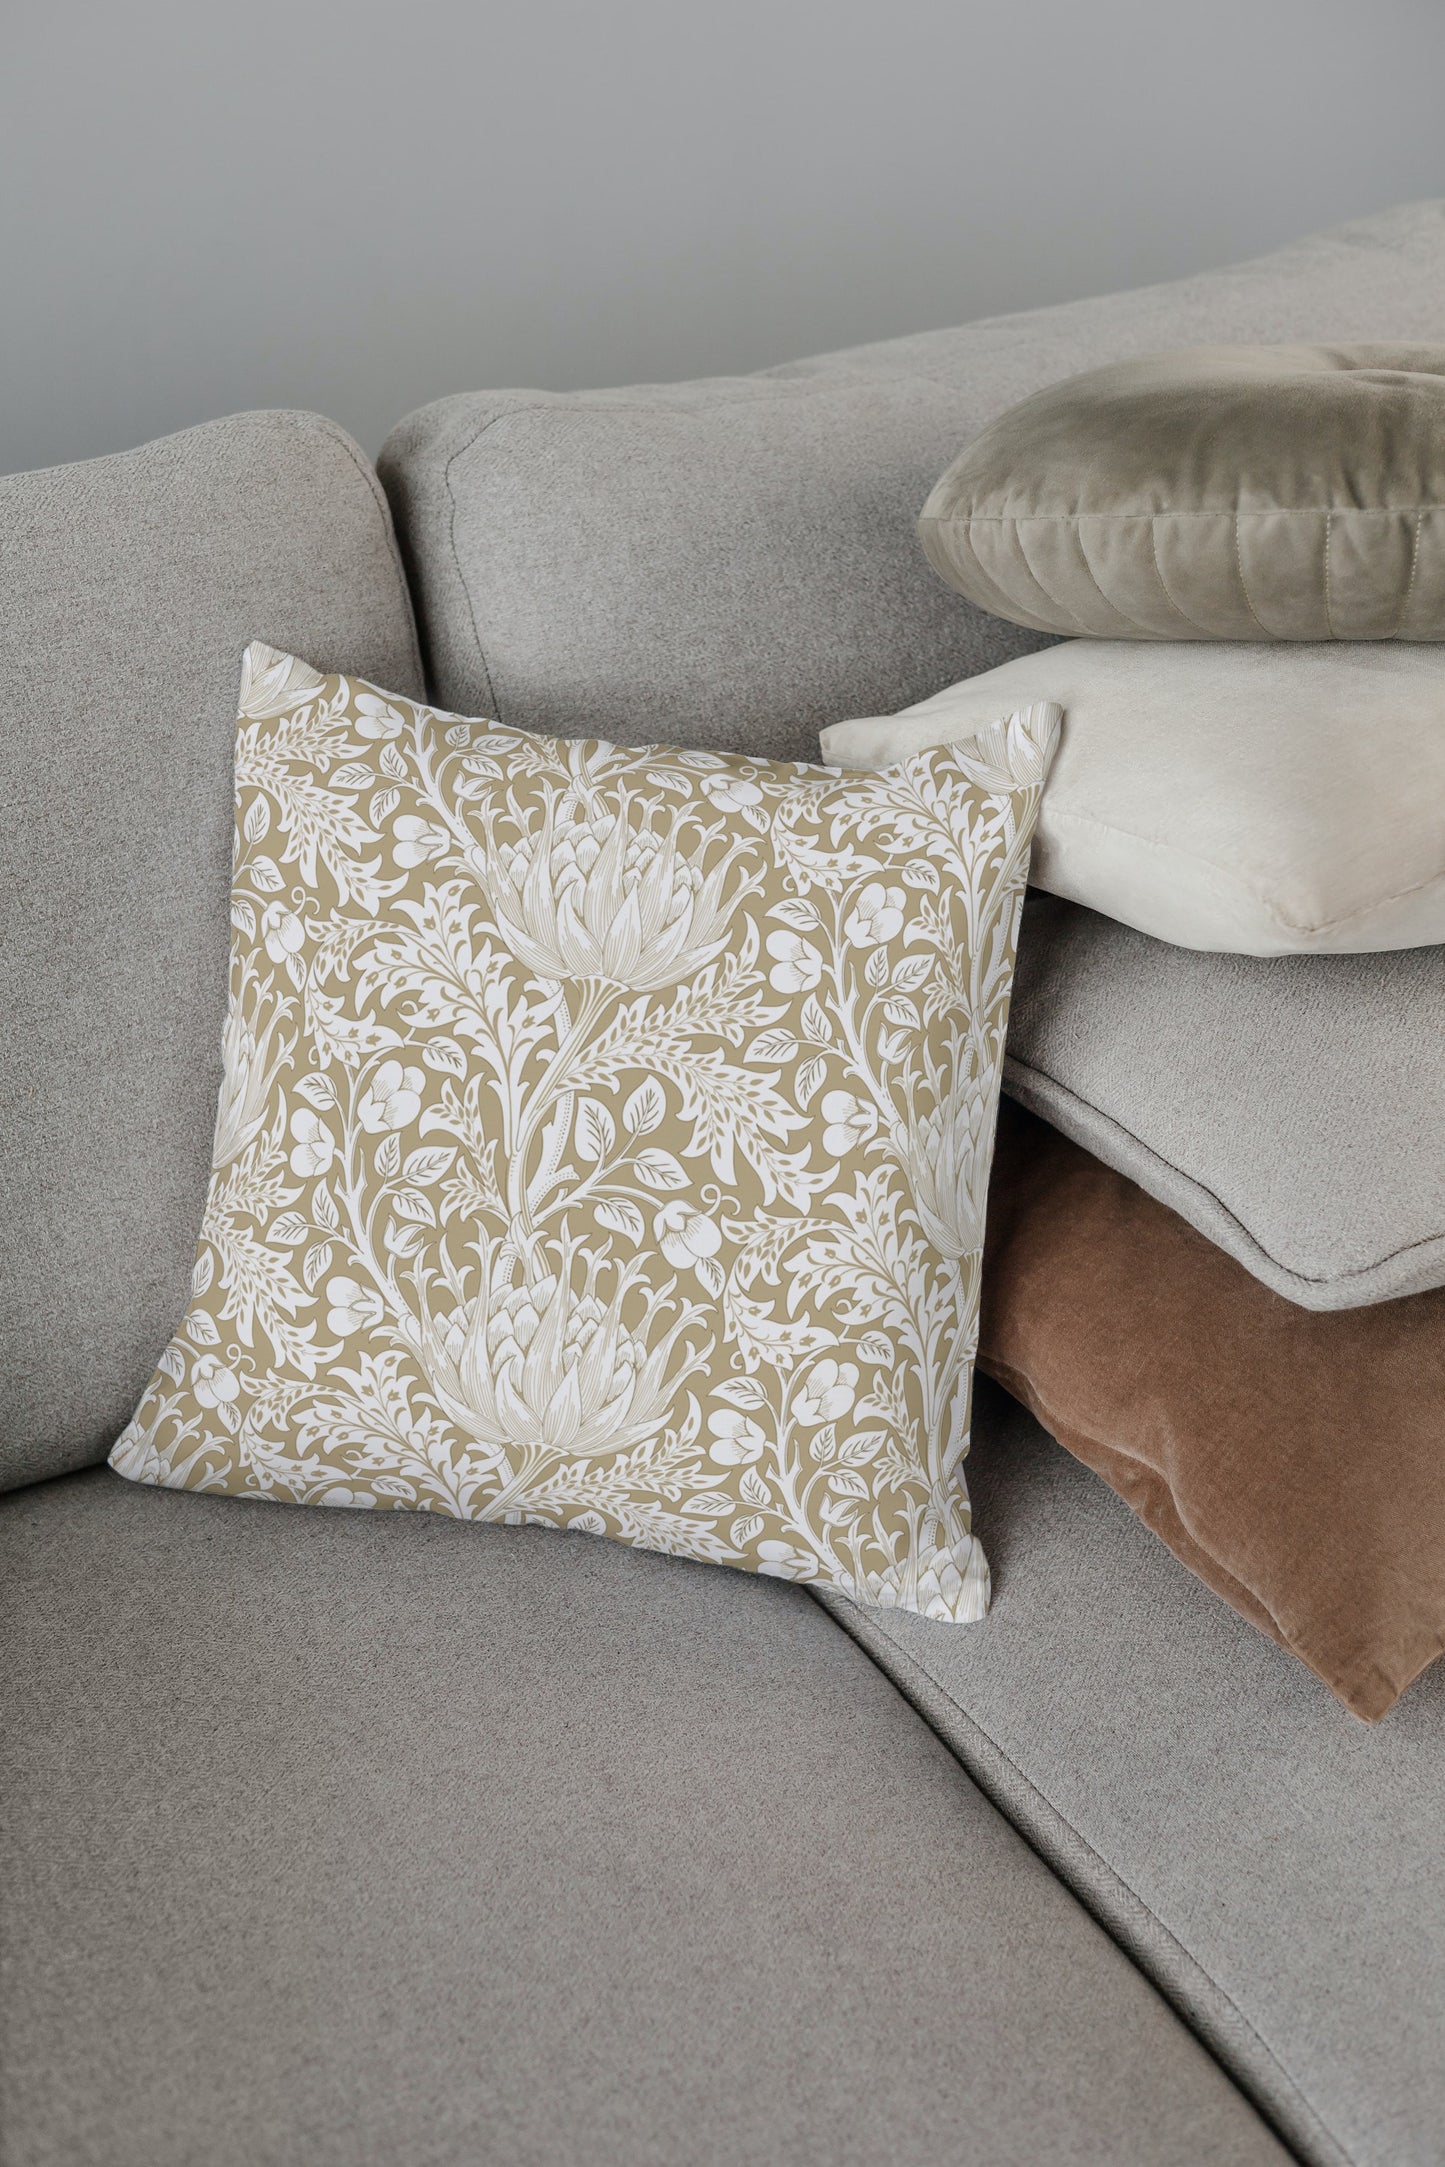 Provence Outdoor Pillows William Morris Artichoke Beige White